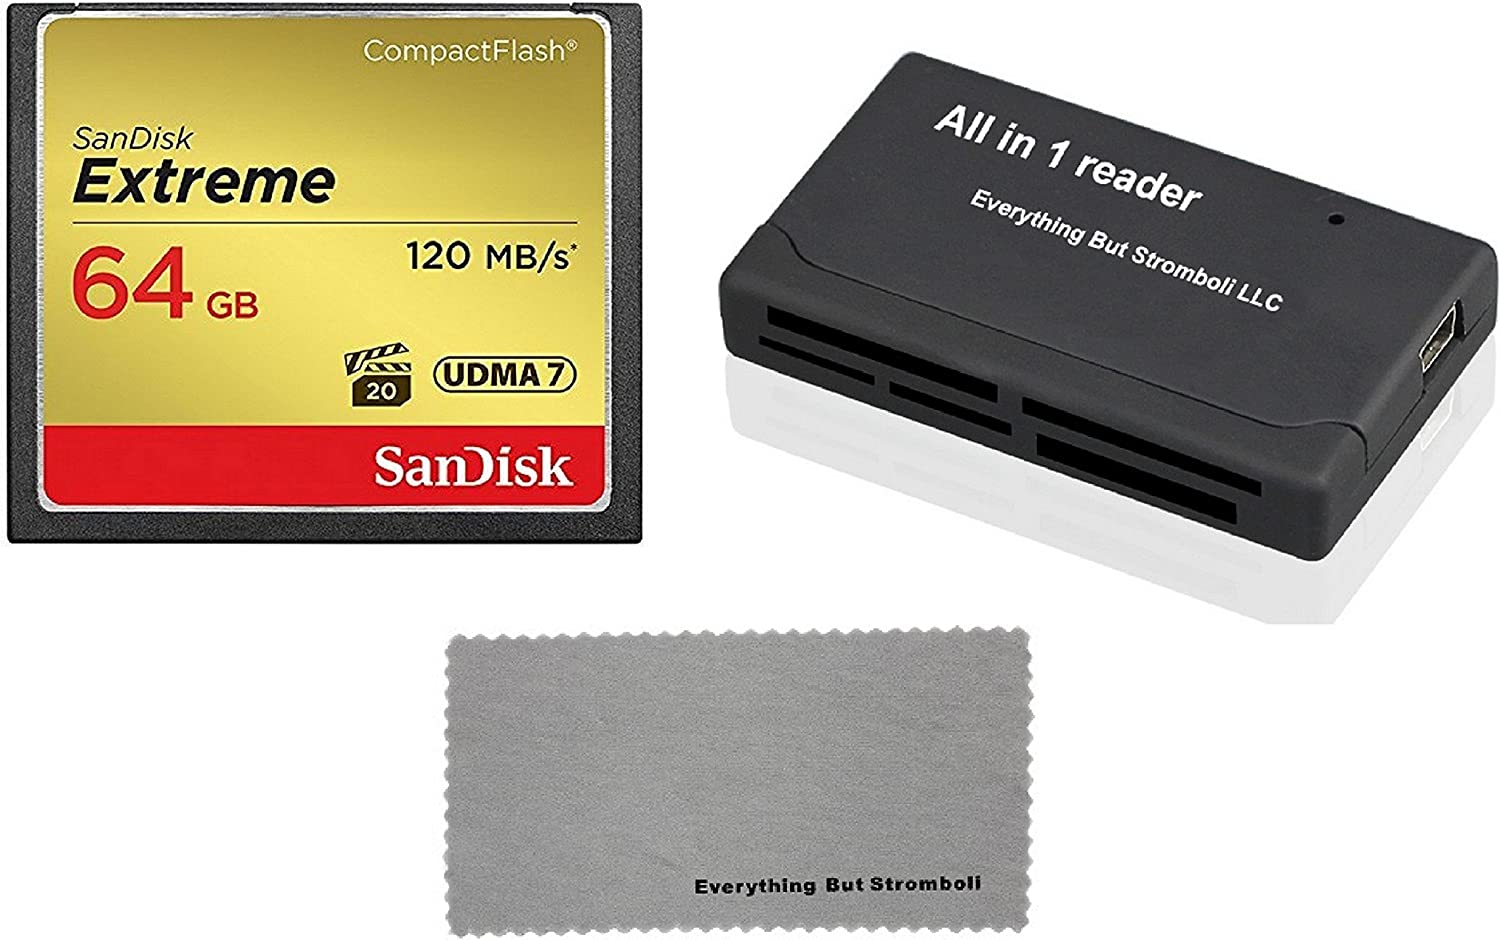 SanDisk Extreme 64GB CompactFlash 메모리 카드는 Stromboli 극세사 천 및 콤보 리더 제외한 모든 것과 함께 캐논 EOS 7D Mark II 디지털 DSLR 카메라 HD UDMA 7 SDCFXSB-064G-G46 과 작동합니다